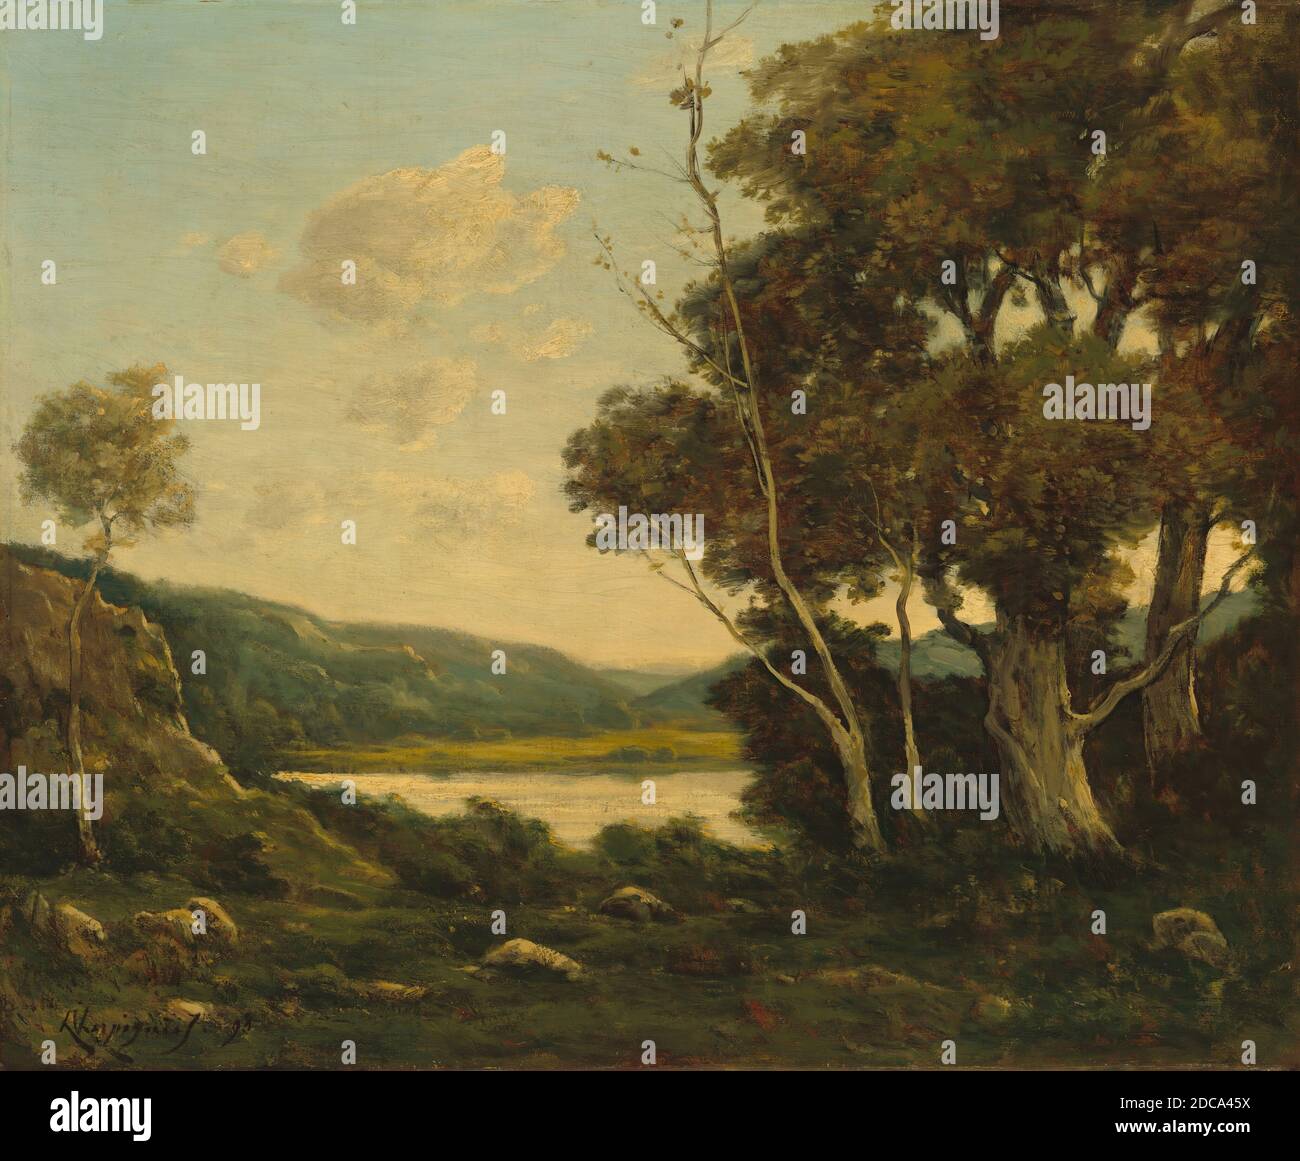 Henri-Joseph Harpignies, (artist), French, 1819 - 1916, Landscape, 1898, oil on canvas, overall: 50.2 x 61.6 cm (19 3/4 x 24 1/4 in.), framed: 80.9 x 92.4 x 9.5 cm (31 7/8 x 36 3/8 x 3 3/4 in Stock Photo